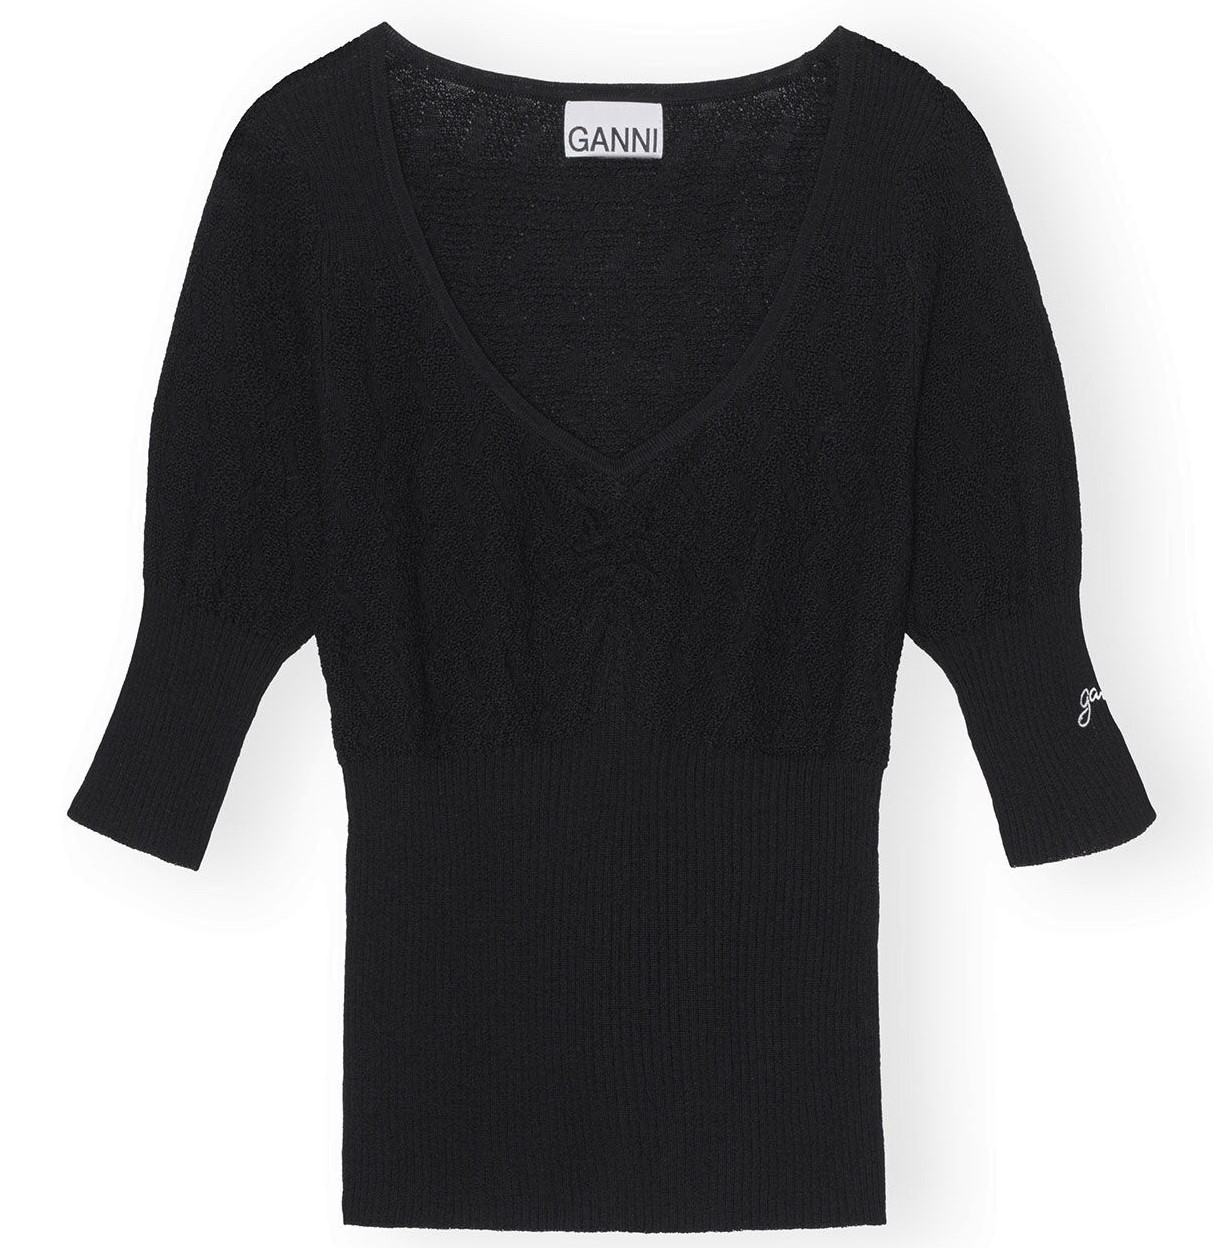 GANNI Merino Knit Pullover in Black